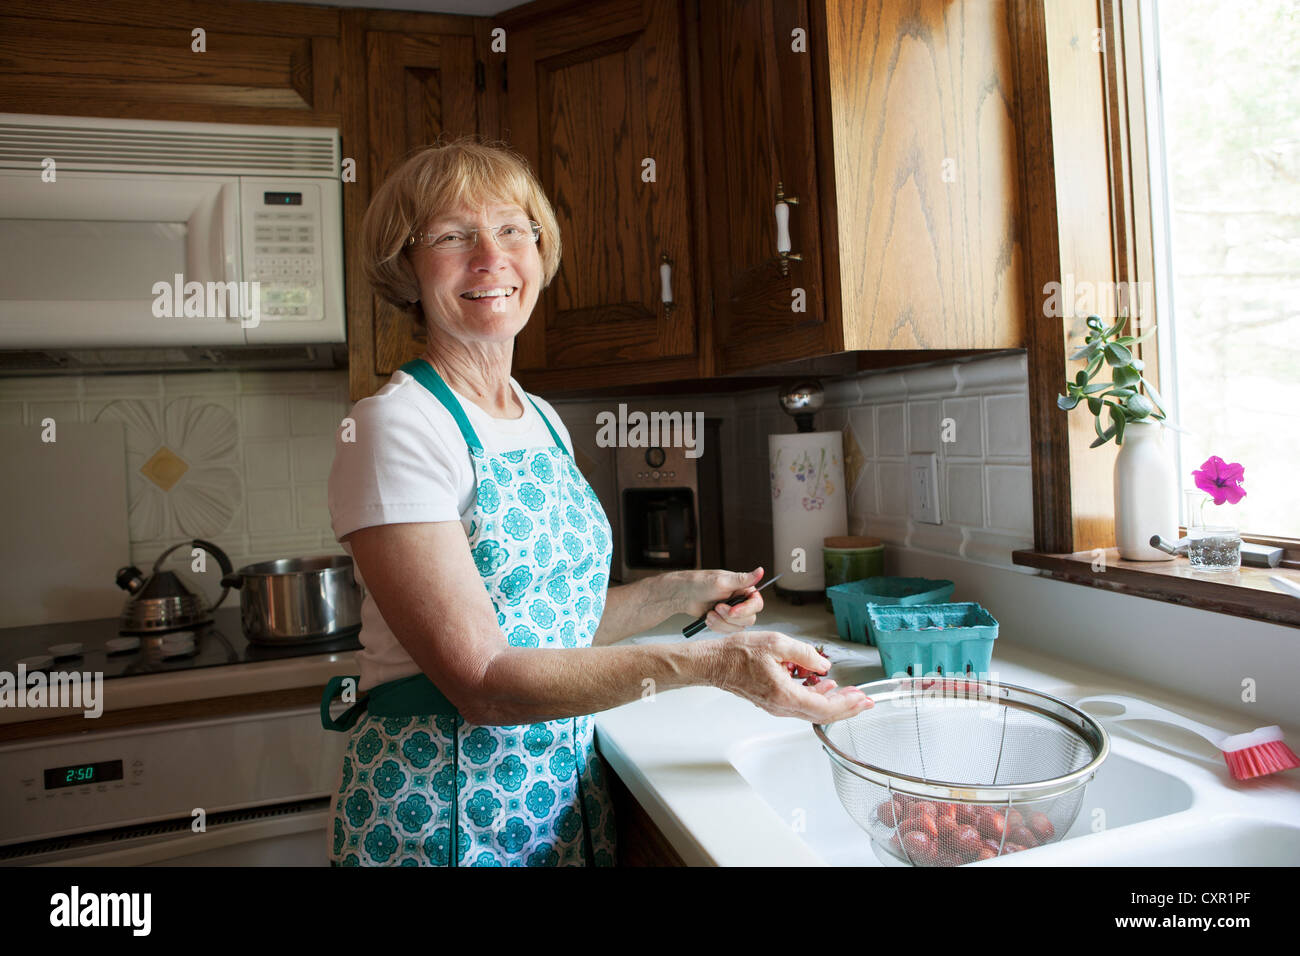 Woman preparing strawberries in kitchen Stock Photo